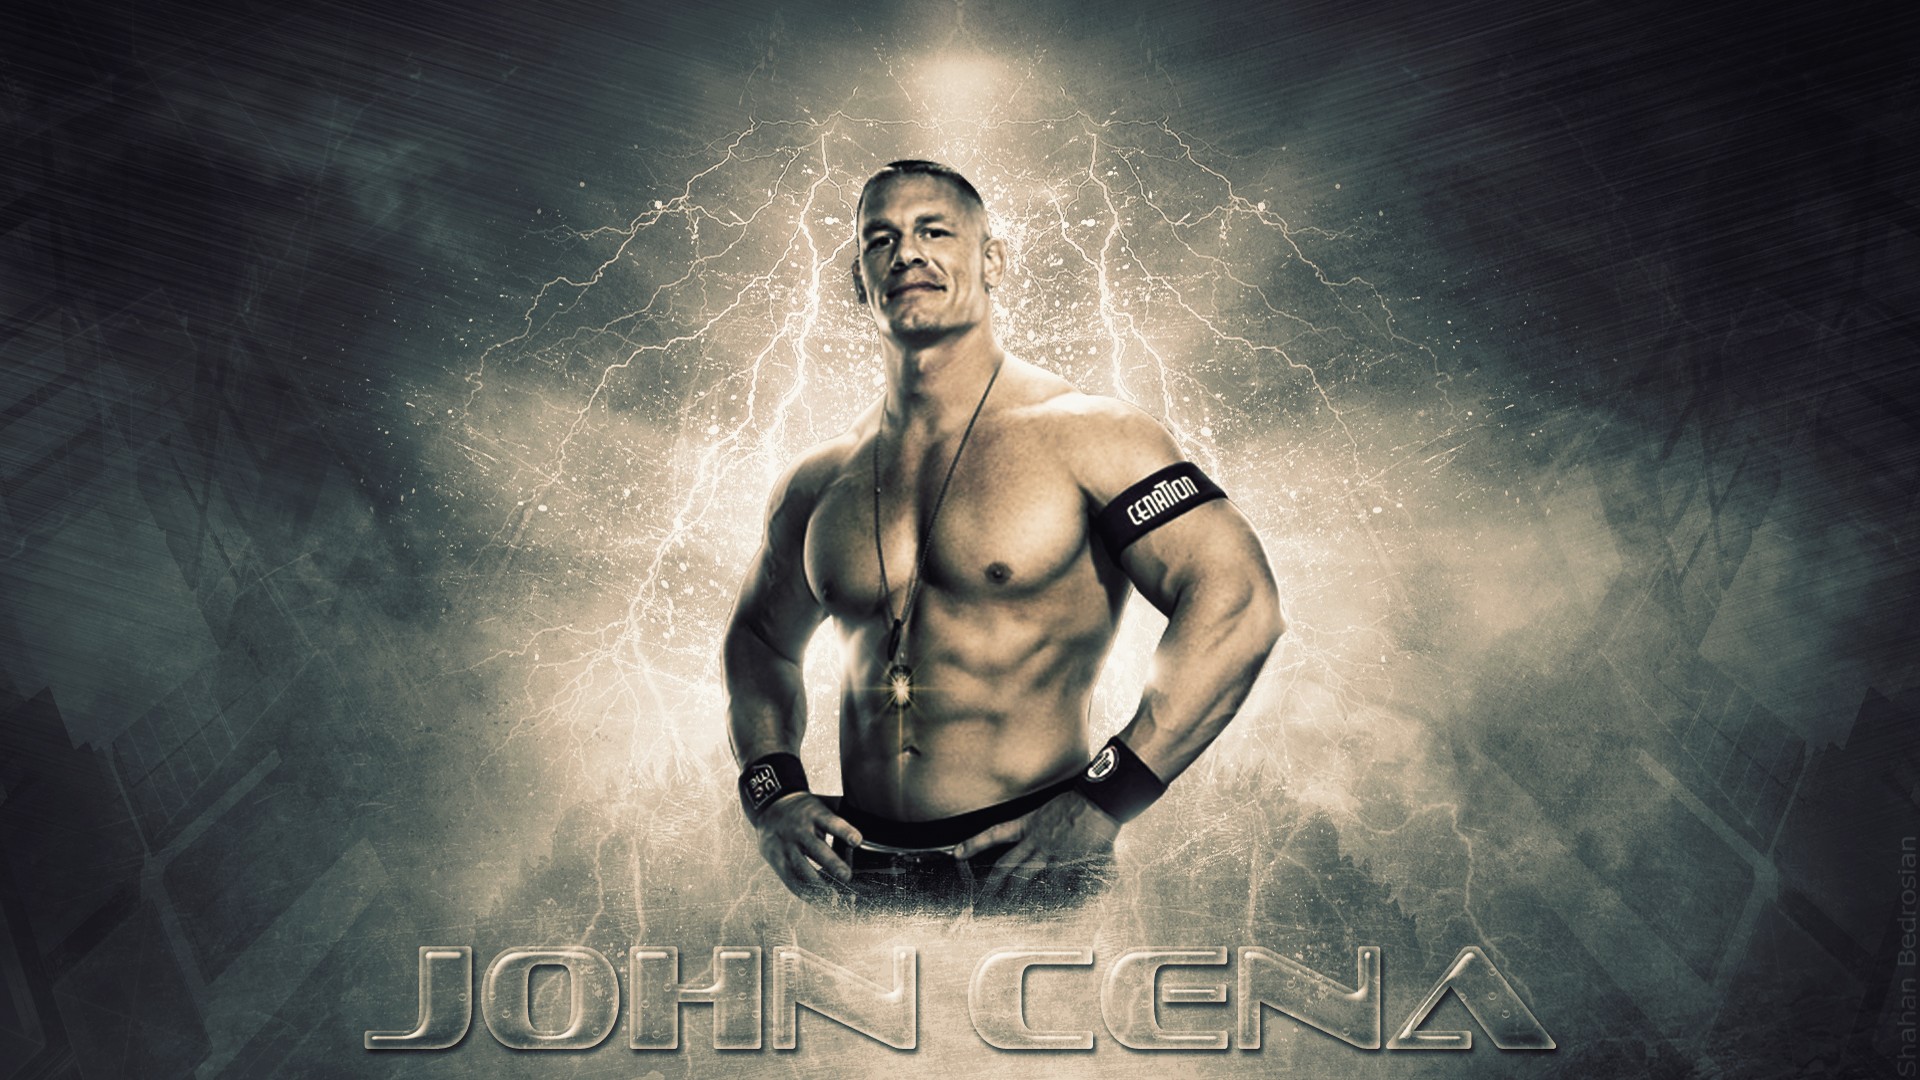 John Cena Wallpaper 1080p Iq1f6e6 Wallpaperexpert